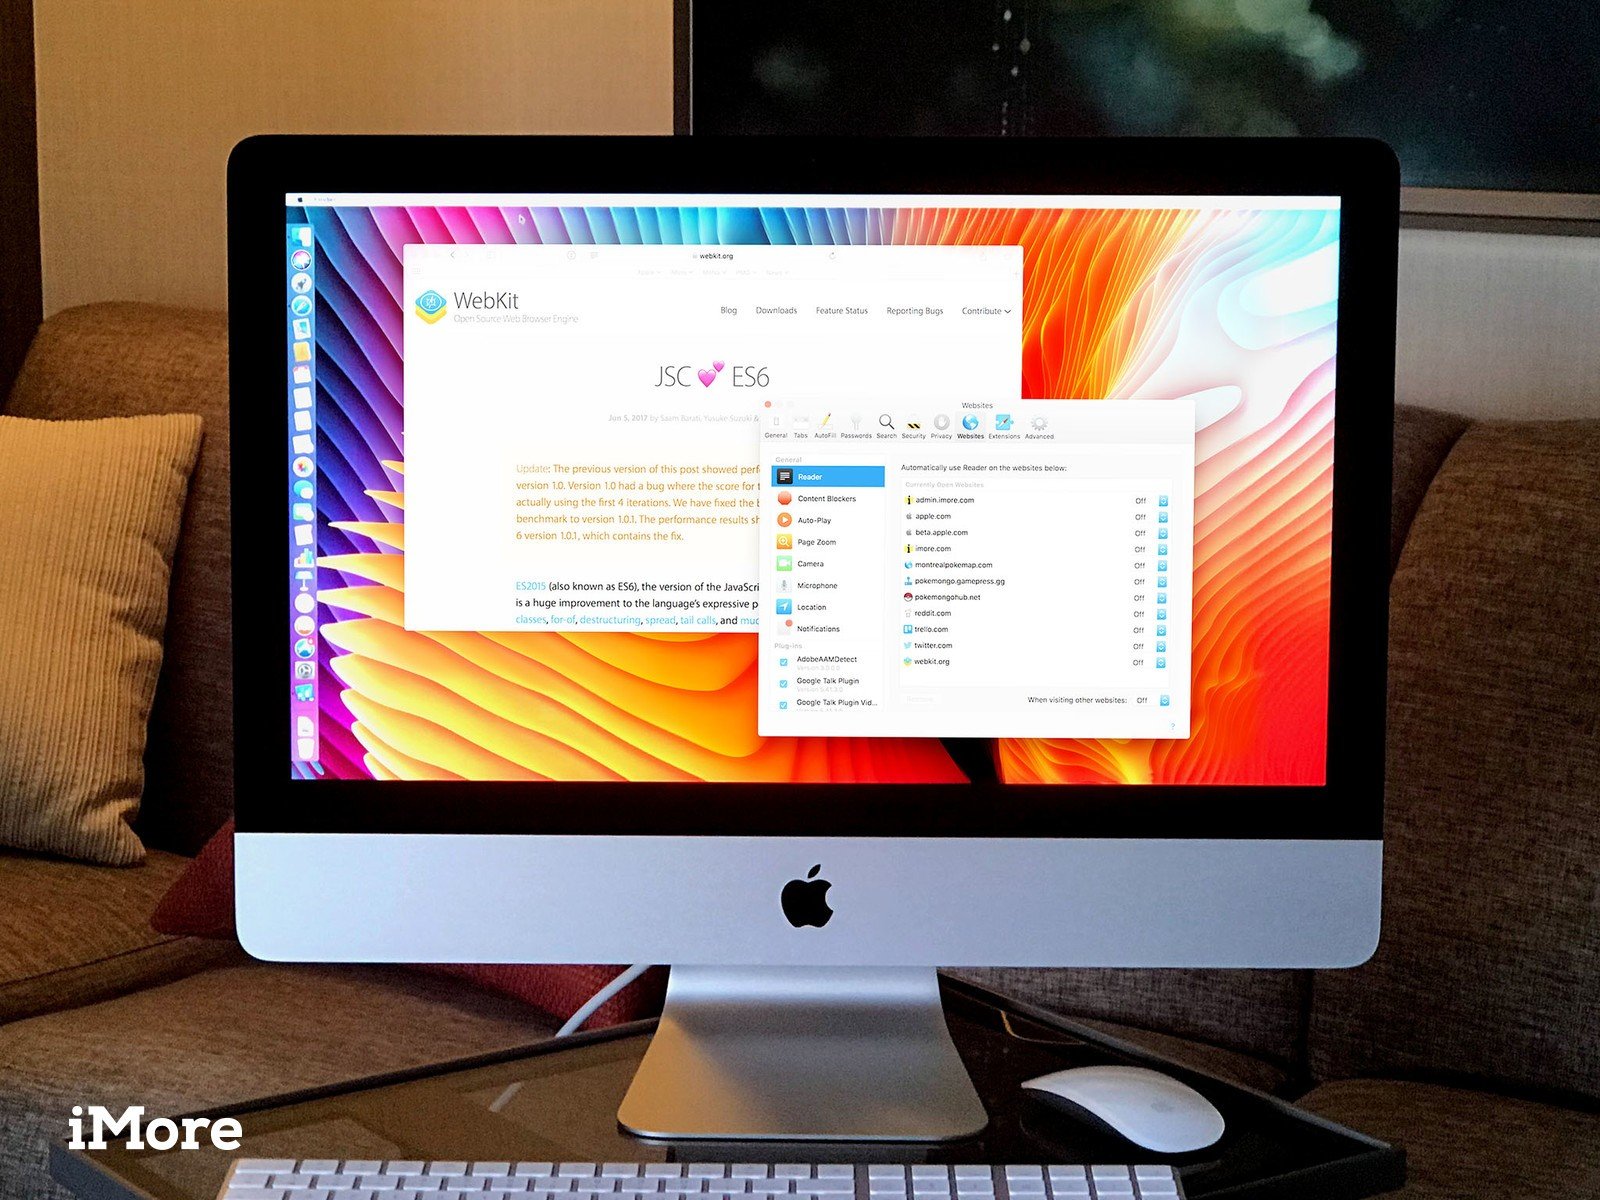 download high sierra for mac running 10.6